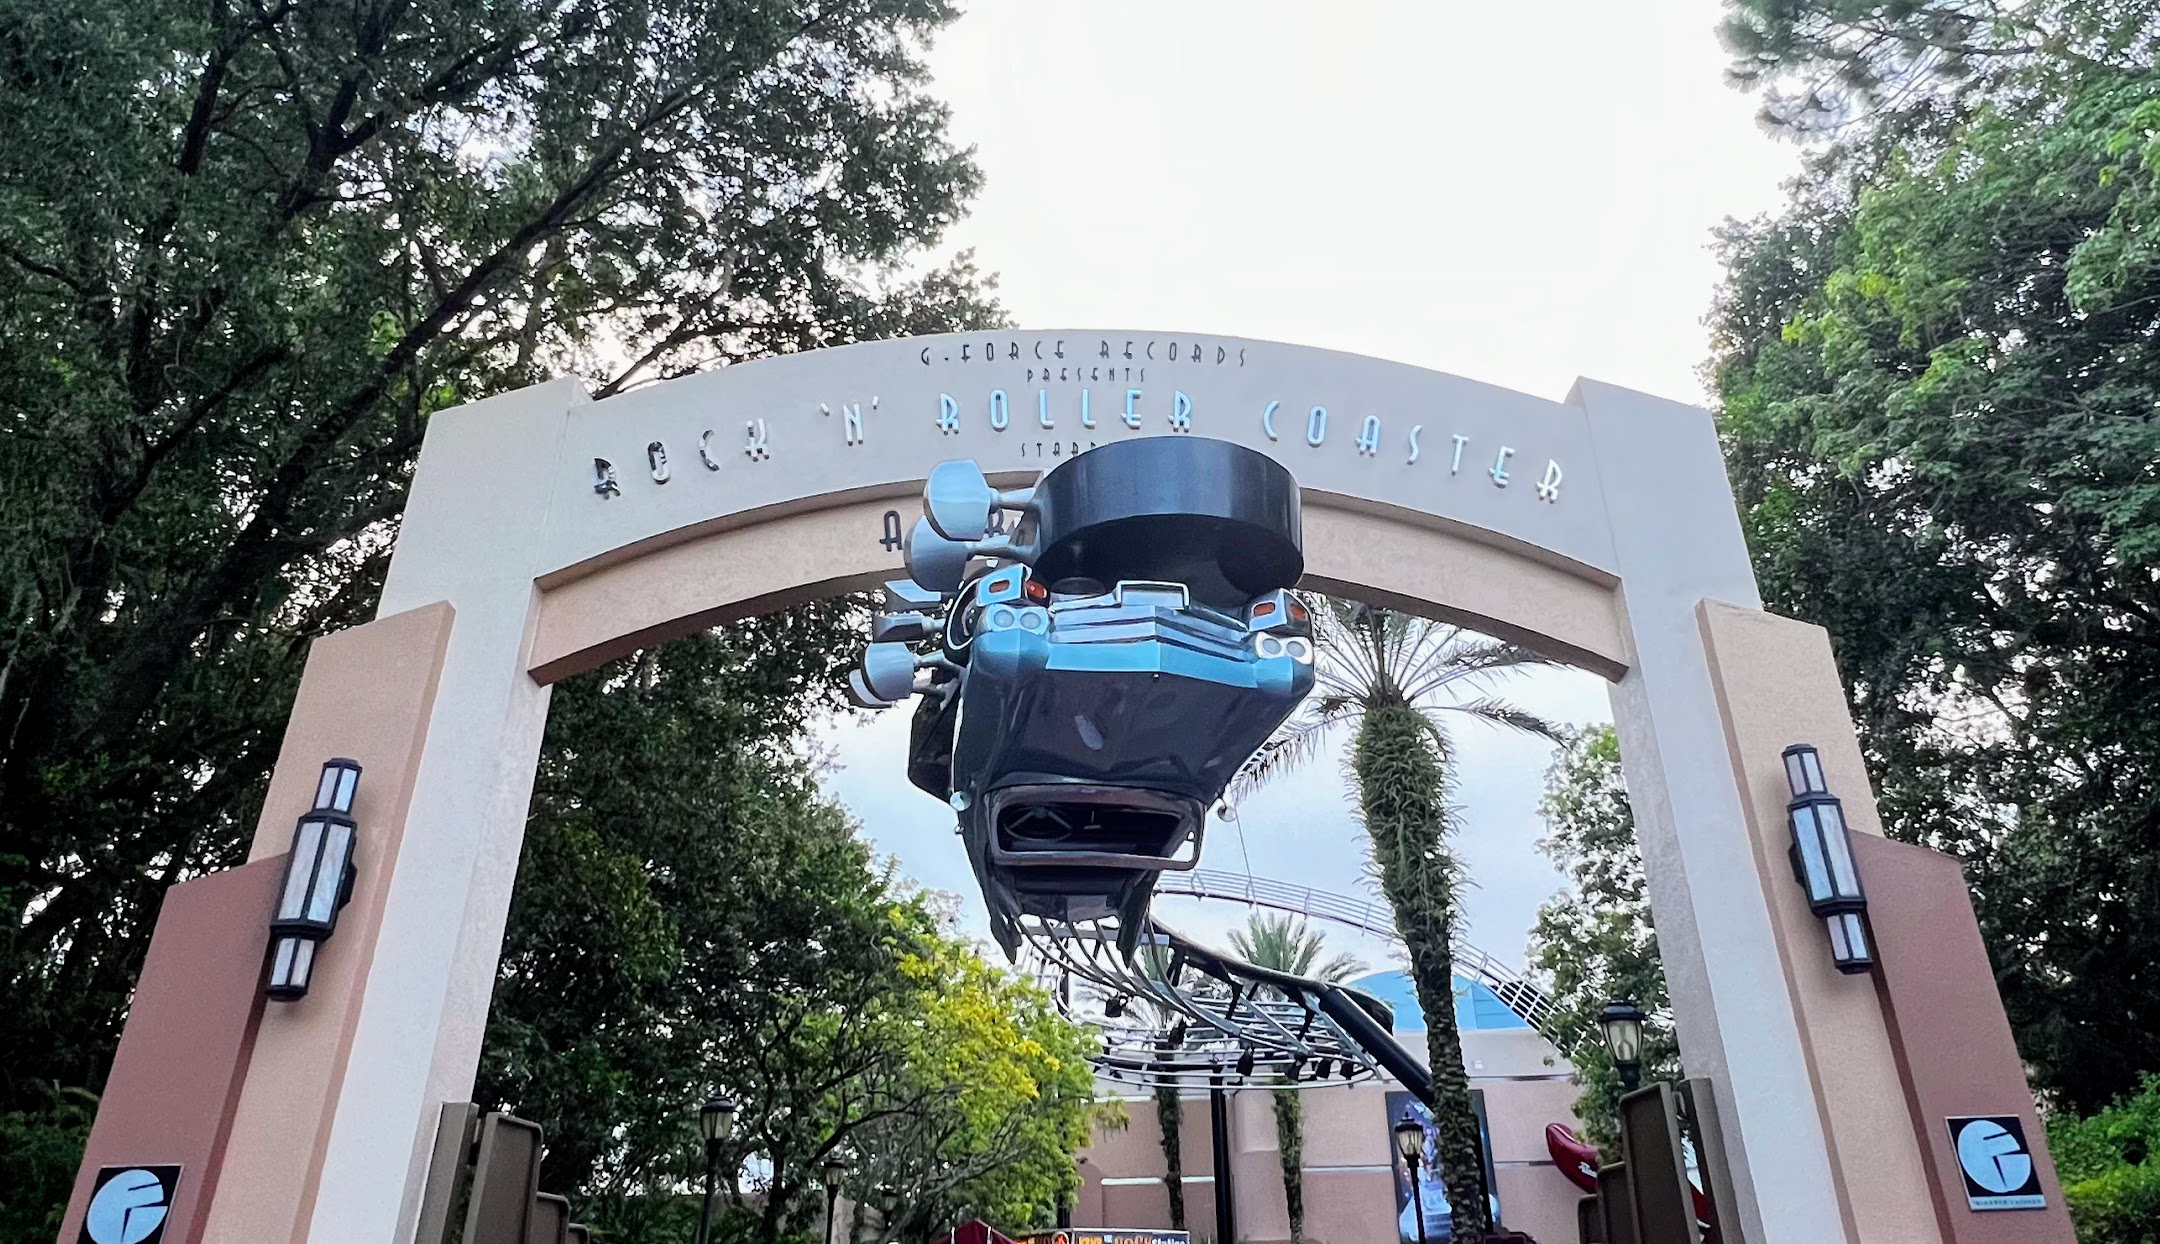 Rock 'n' Roller Coaster at Disney World's Hollywood Studios